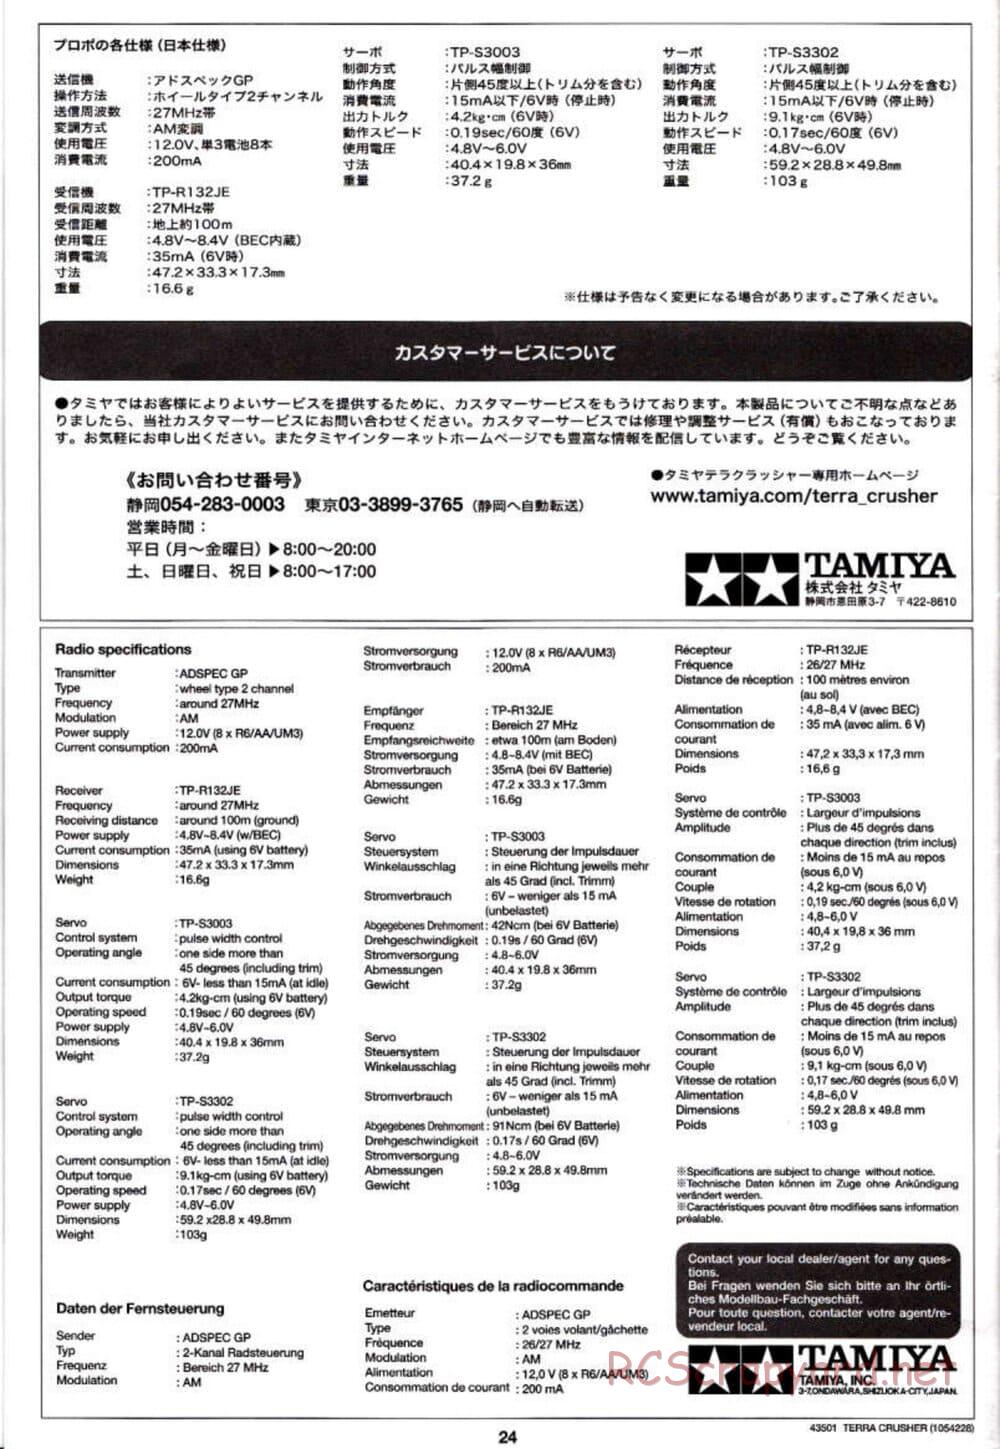 Tamiya - Terra Crusher - TGM-02 Chassis - Manual - Page 24